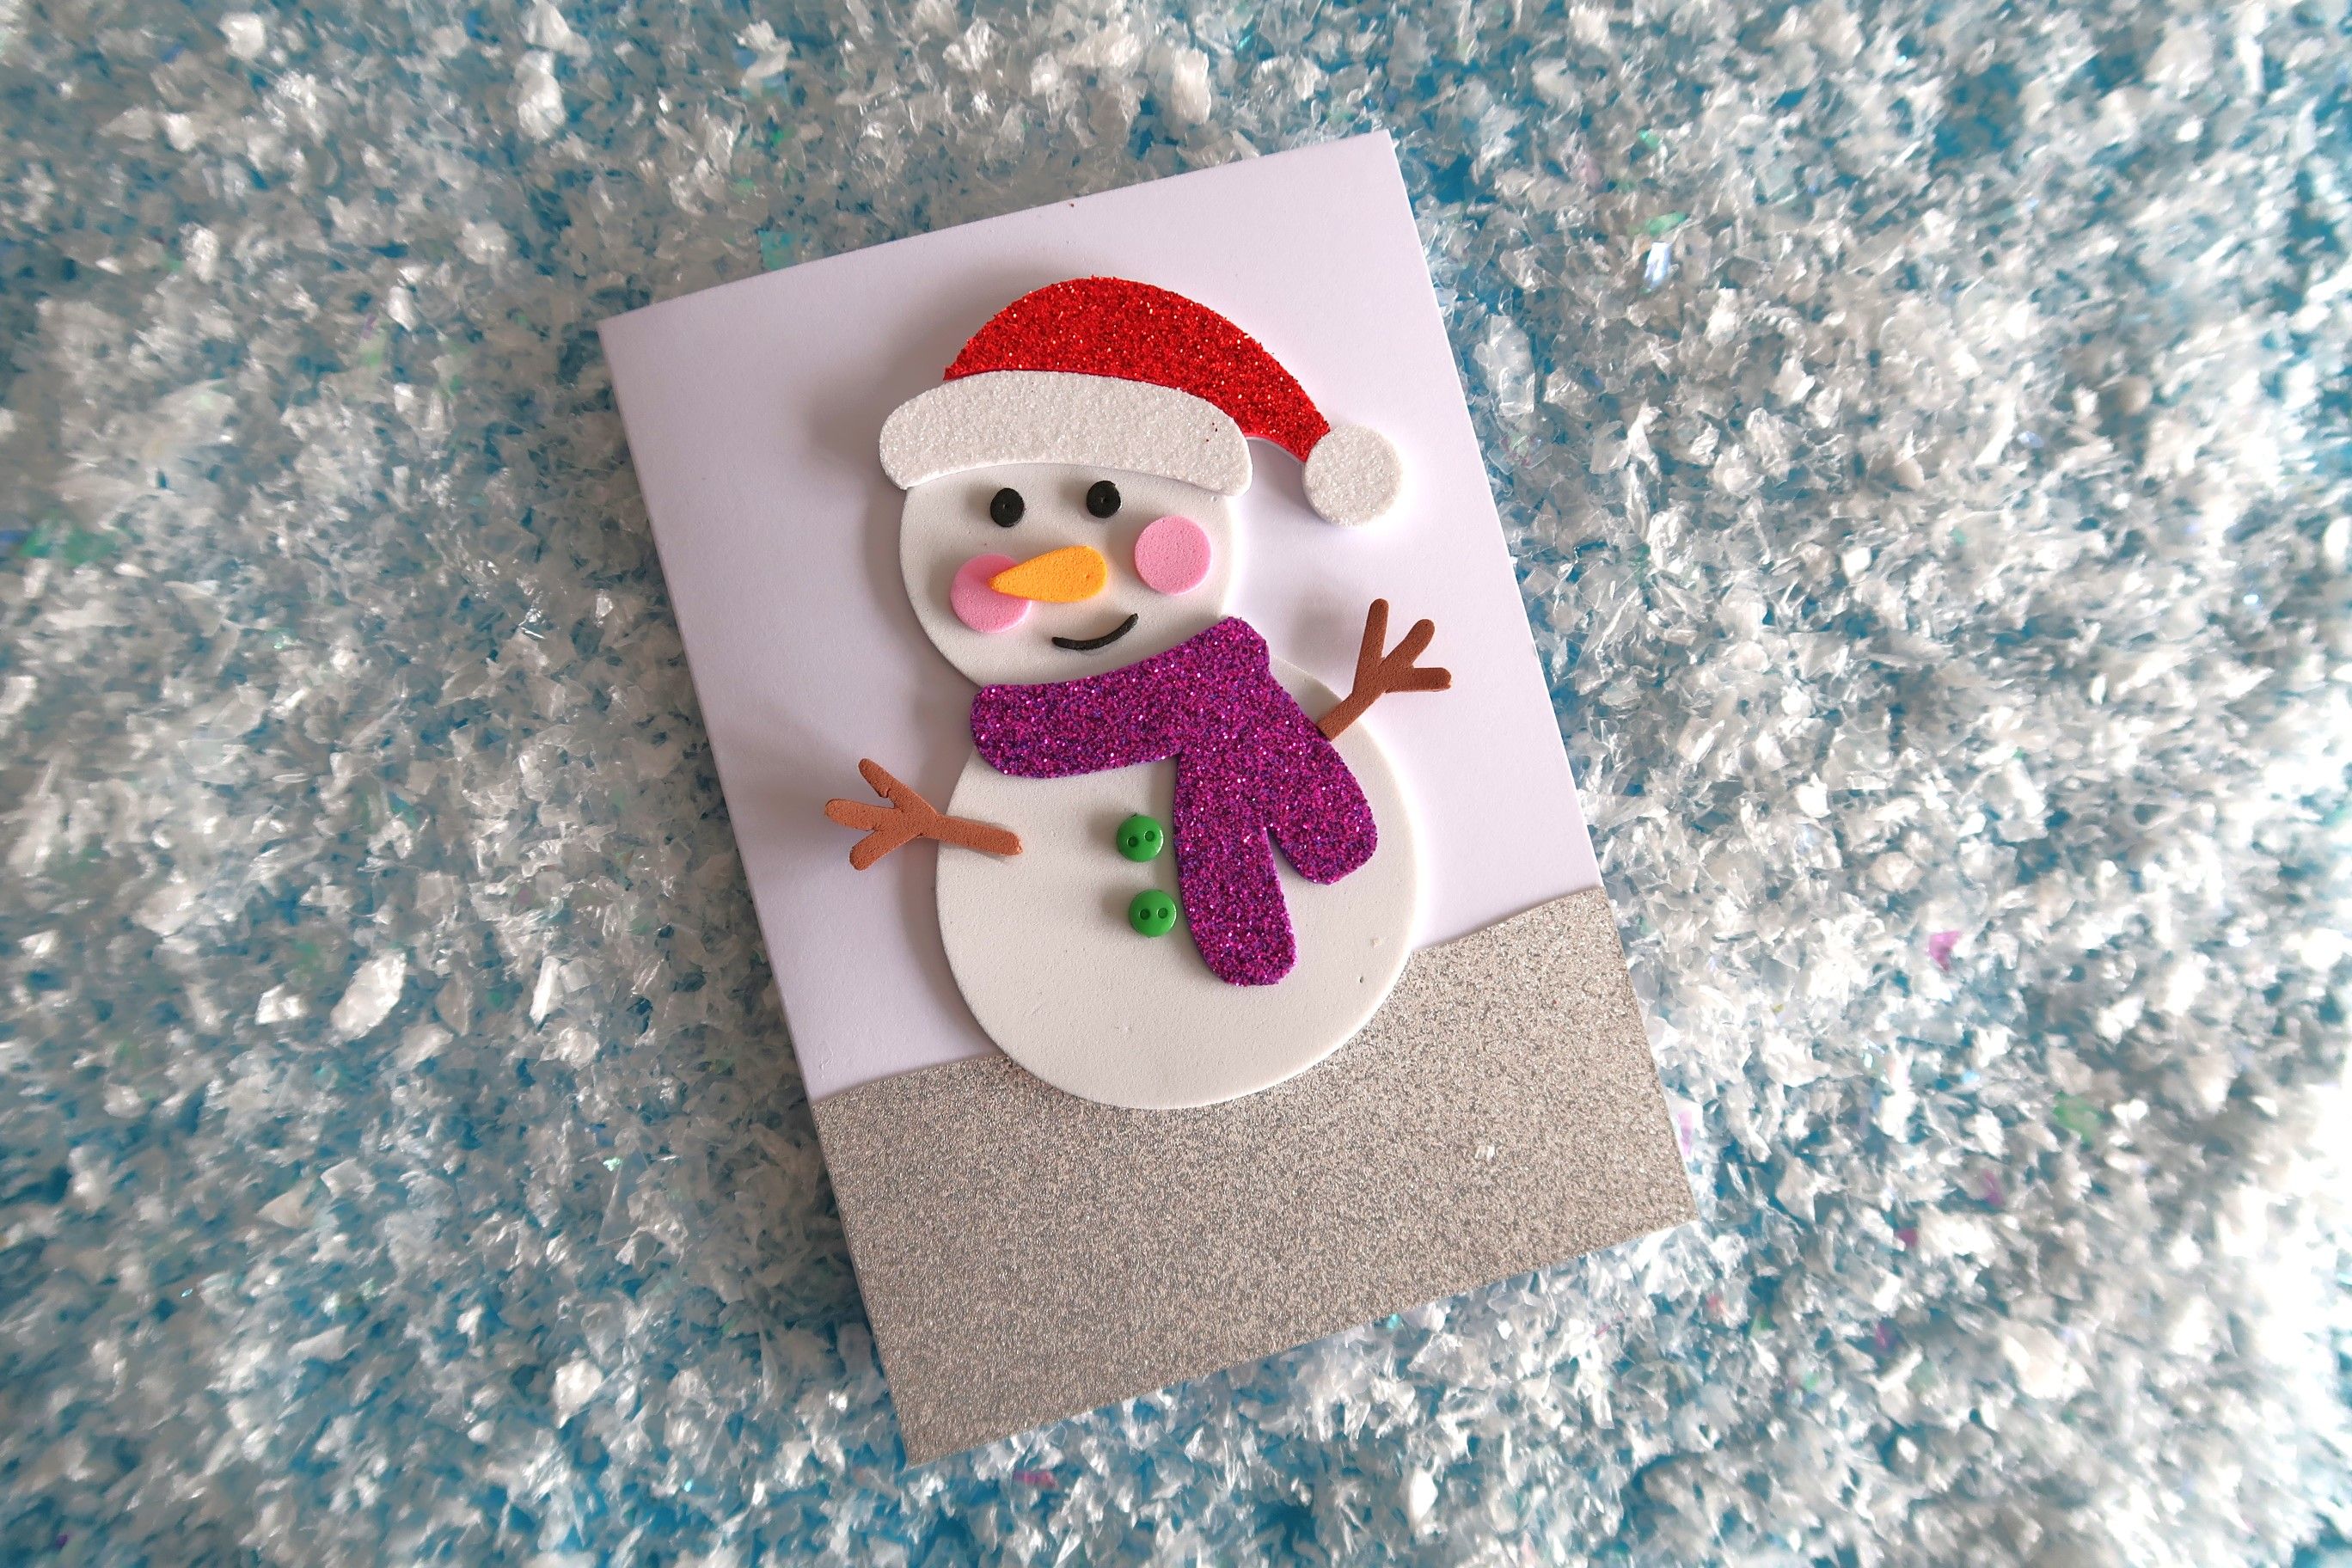 36 Pack Build a Snowman Kit, Snowman Kit Inspiring DIY Crafts for Kids,  Creative Air Dry Clay Modeling Snowman Craft, Enhance Creativity Christmas